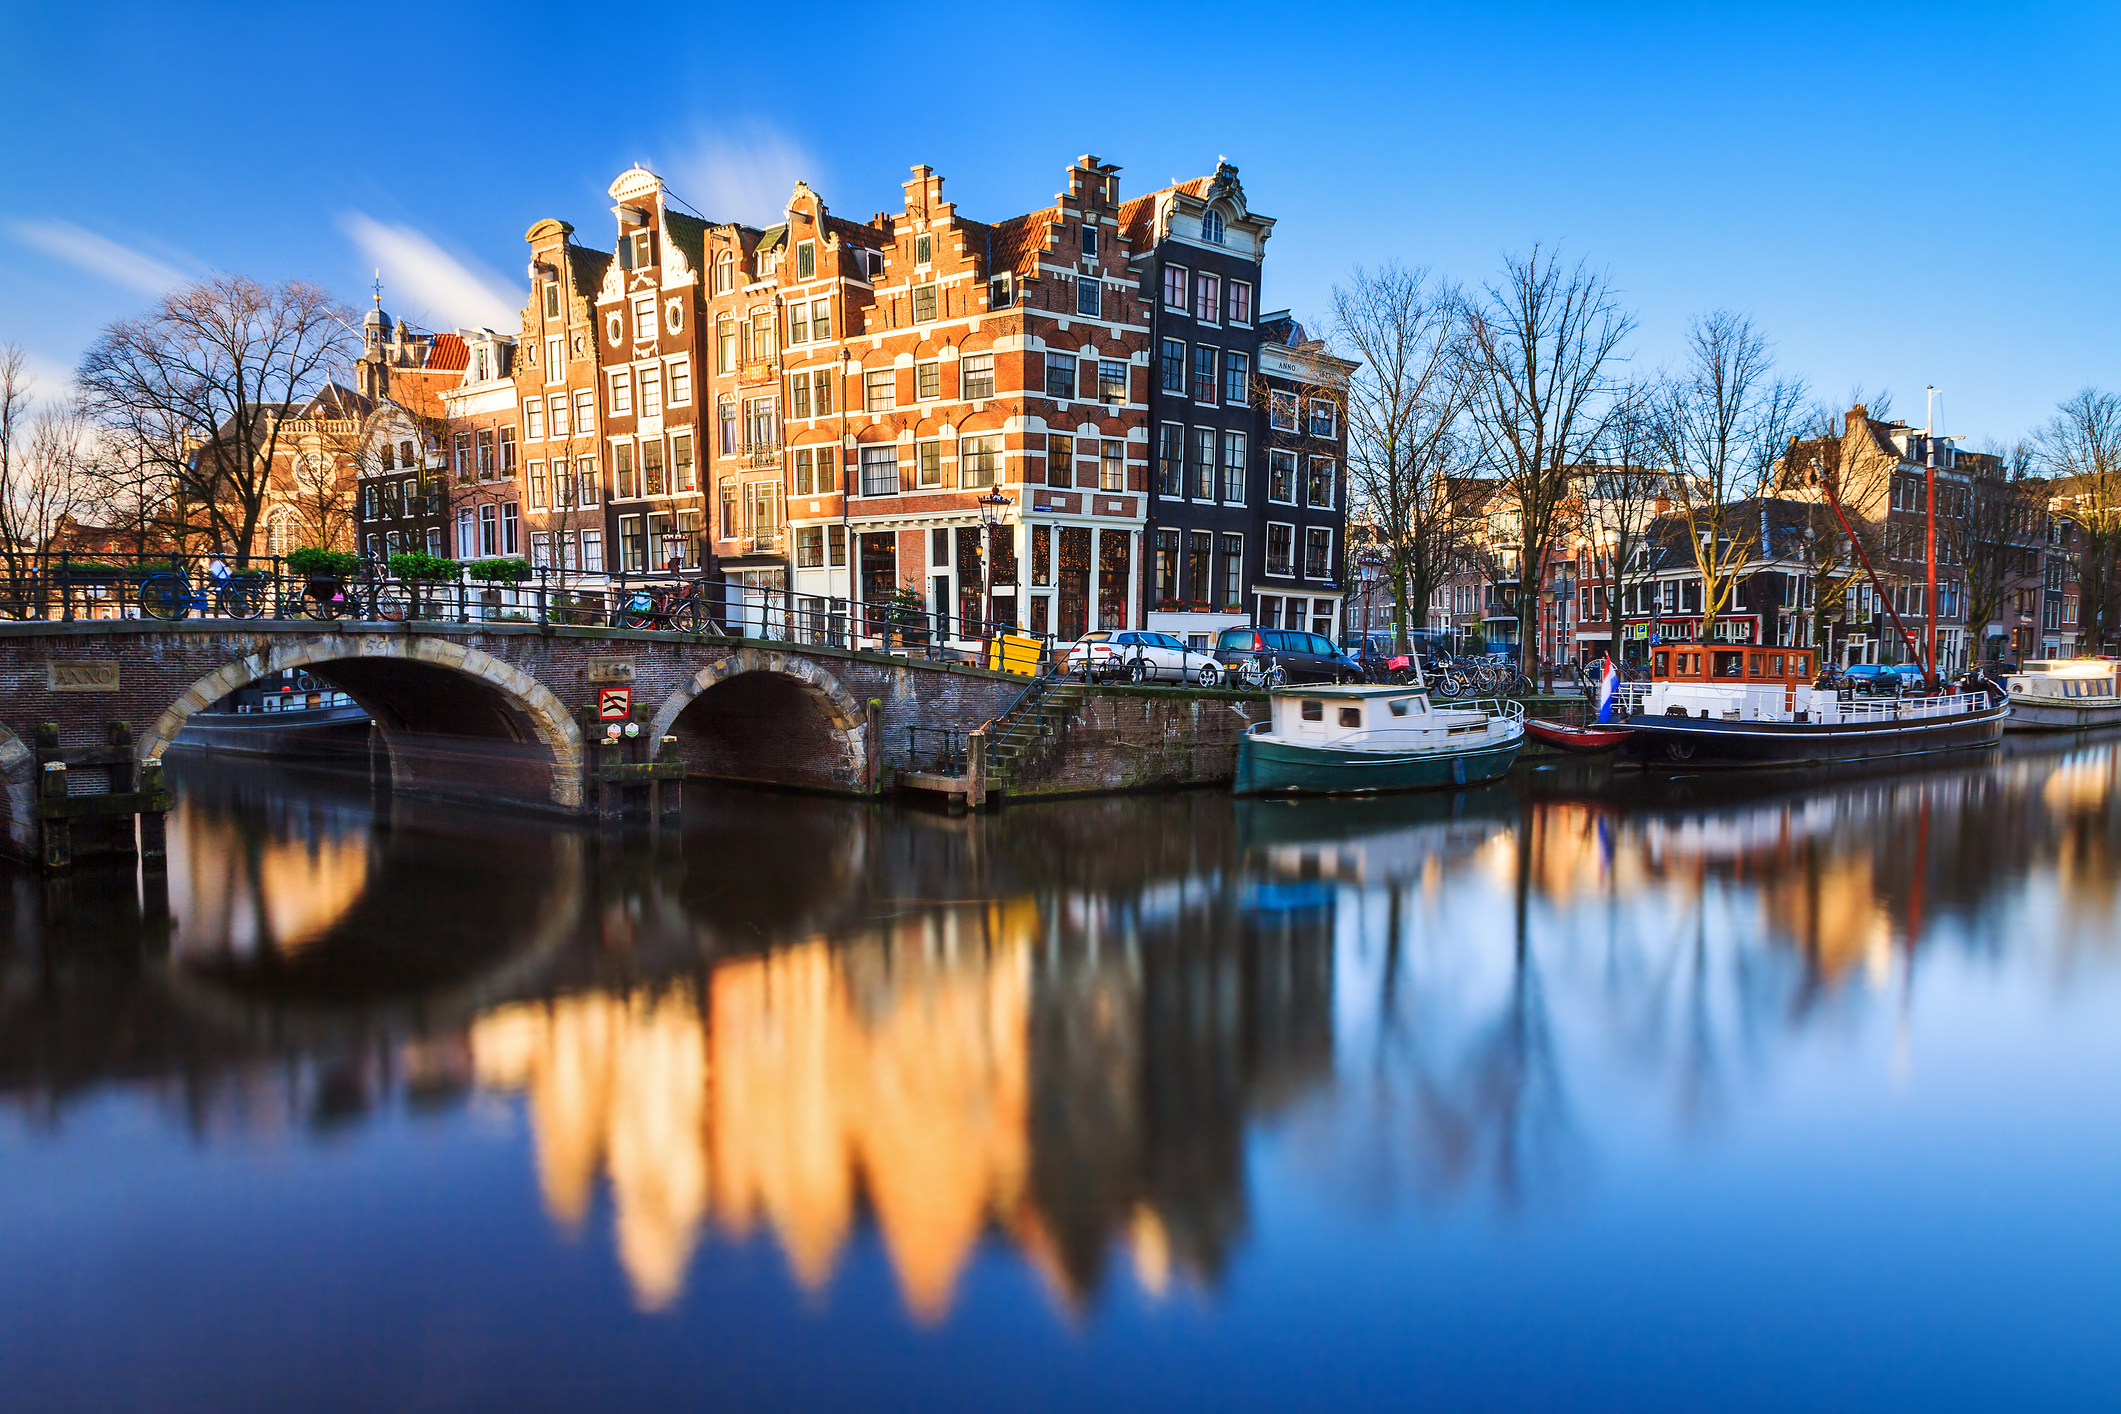 Amsterdam in February